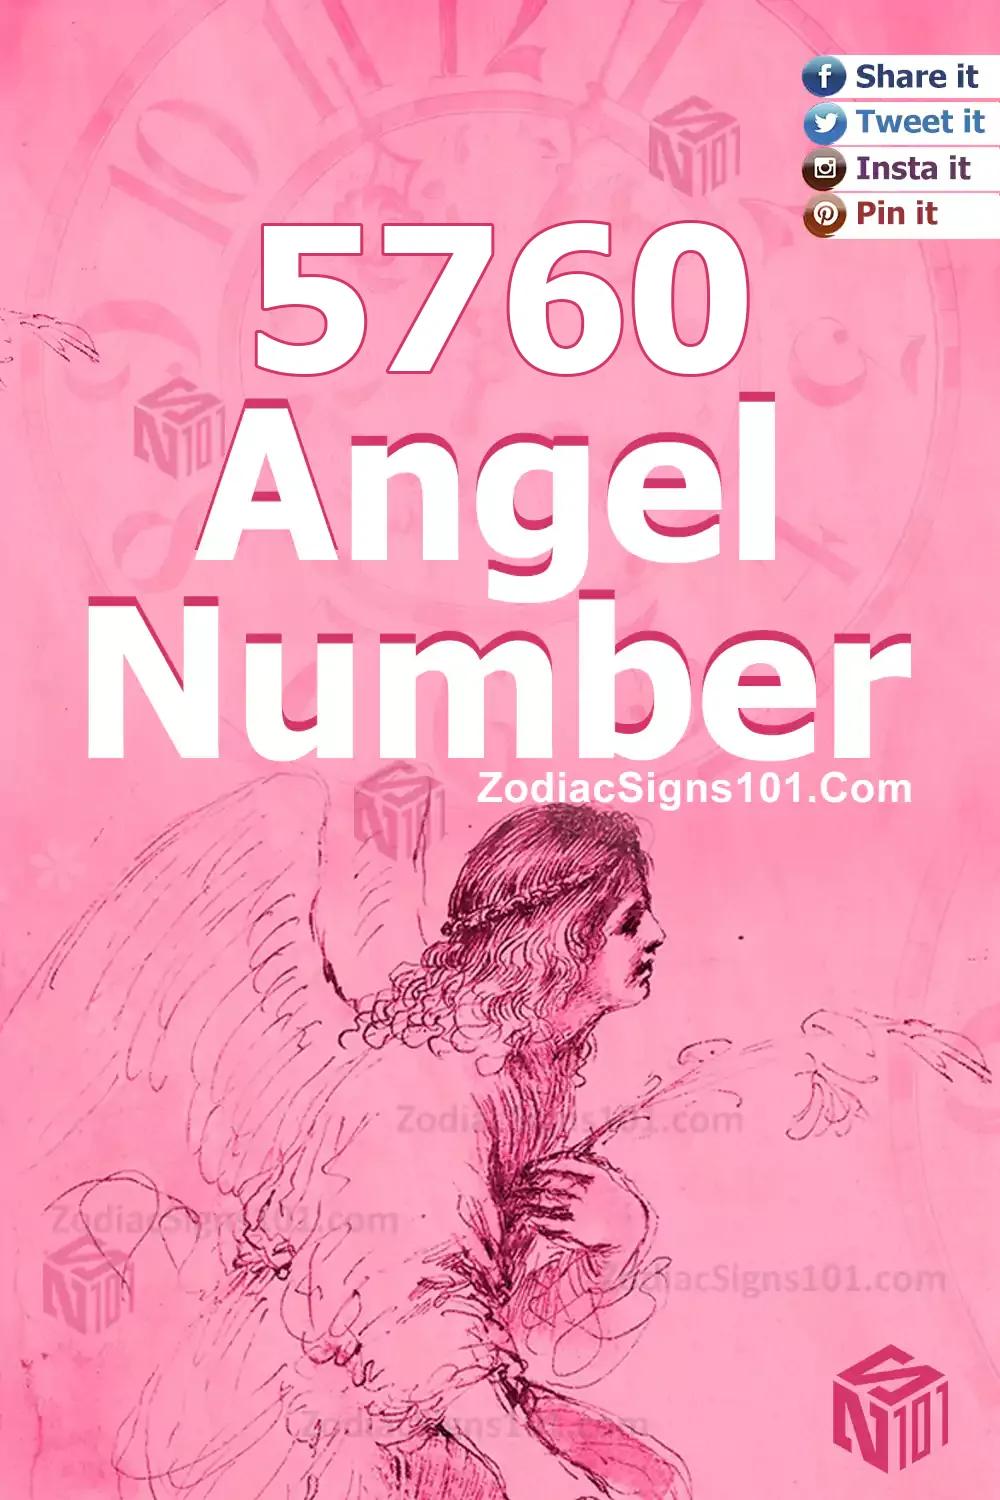 5760-Angel-Number-Meaning.jpg